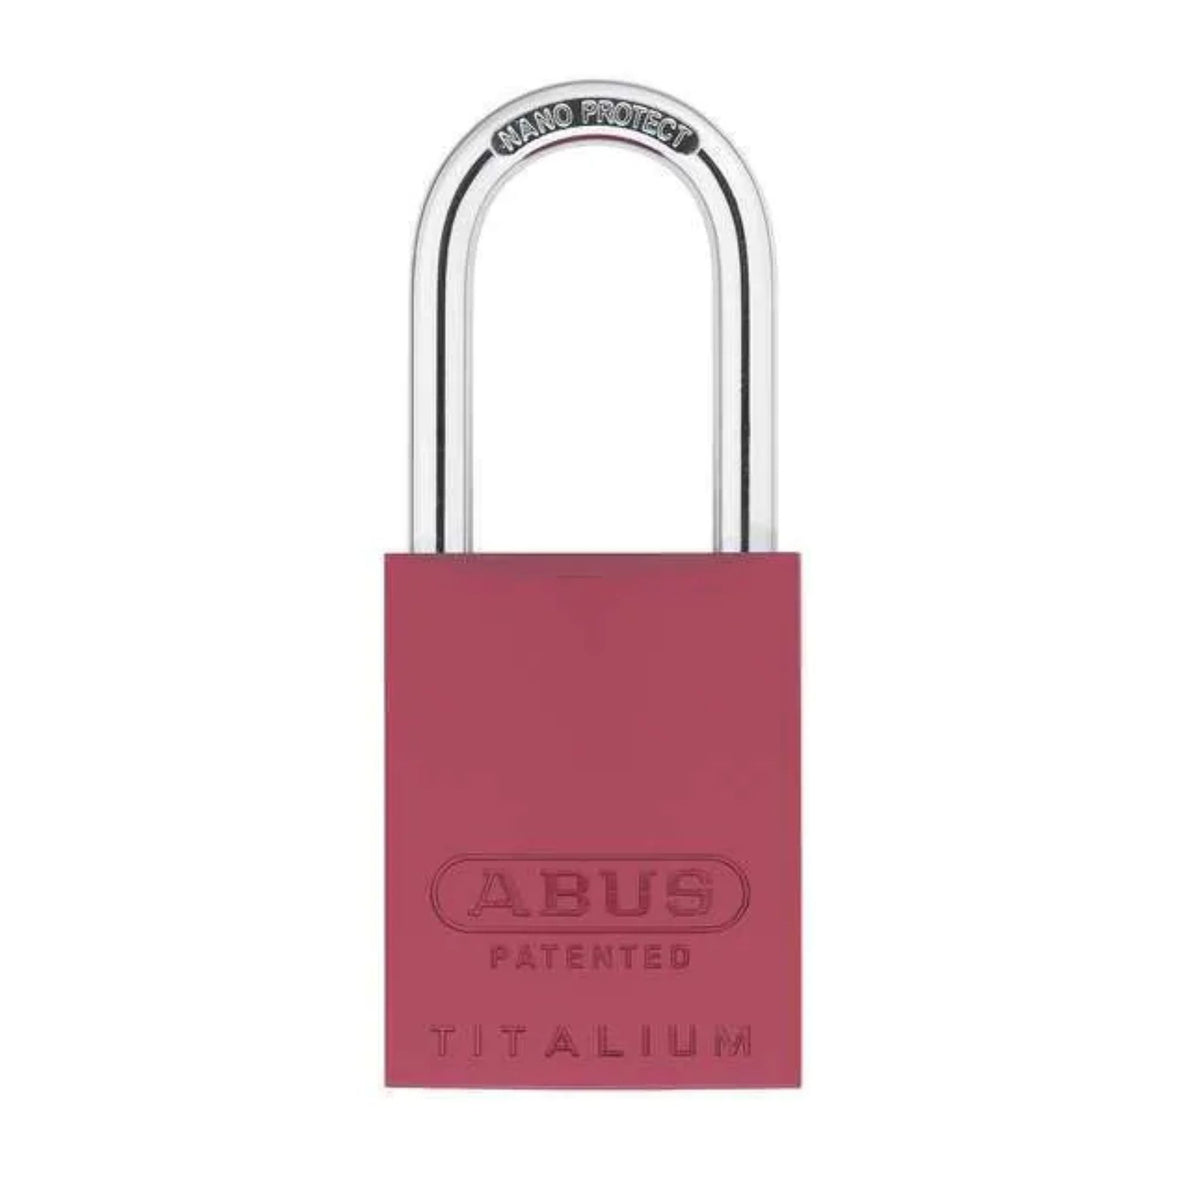 Abus 83AL/40-1000 Red Titalium Safety Lock with Corbin Russwin Keyway - The Lock Source